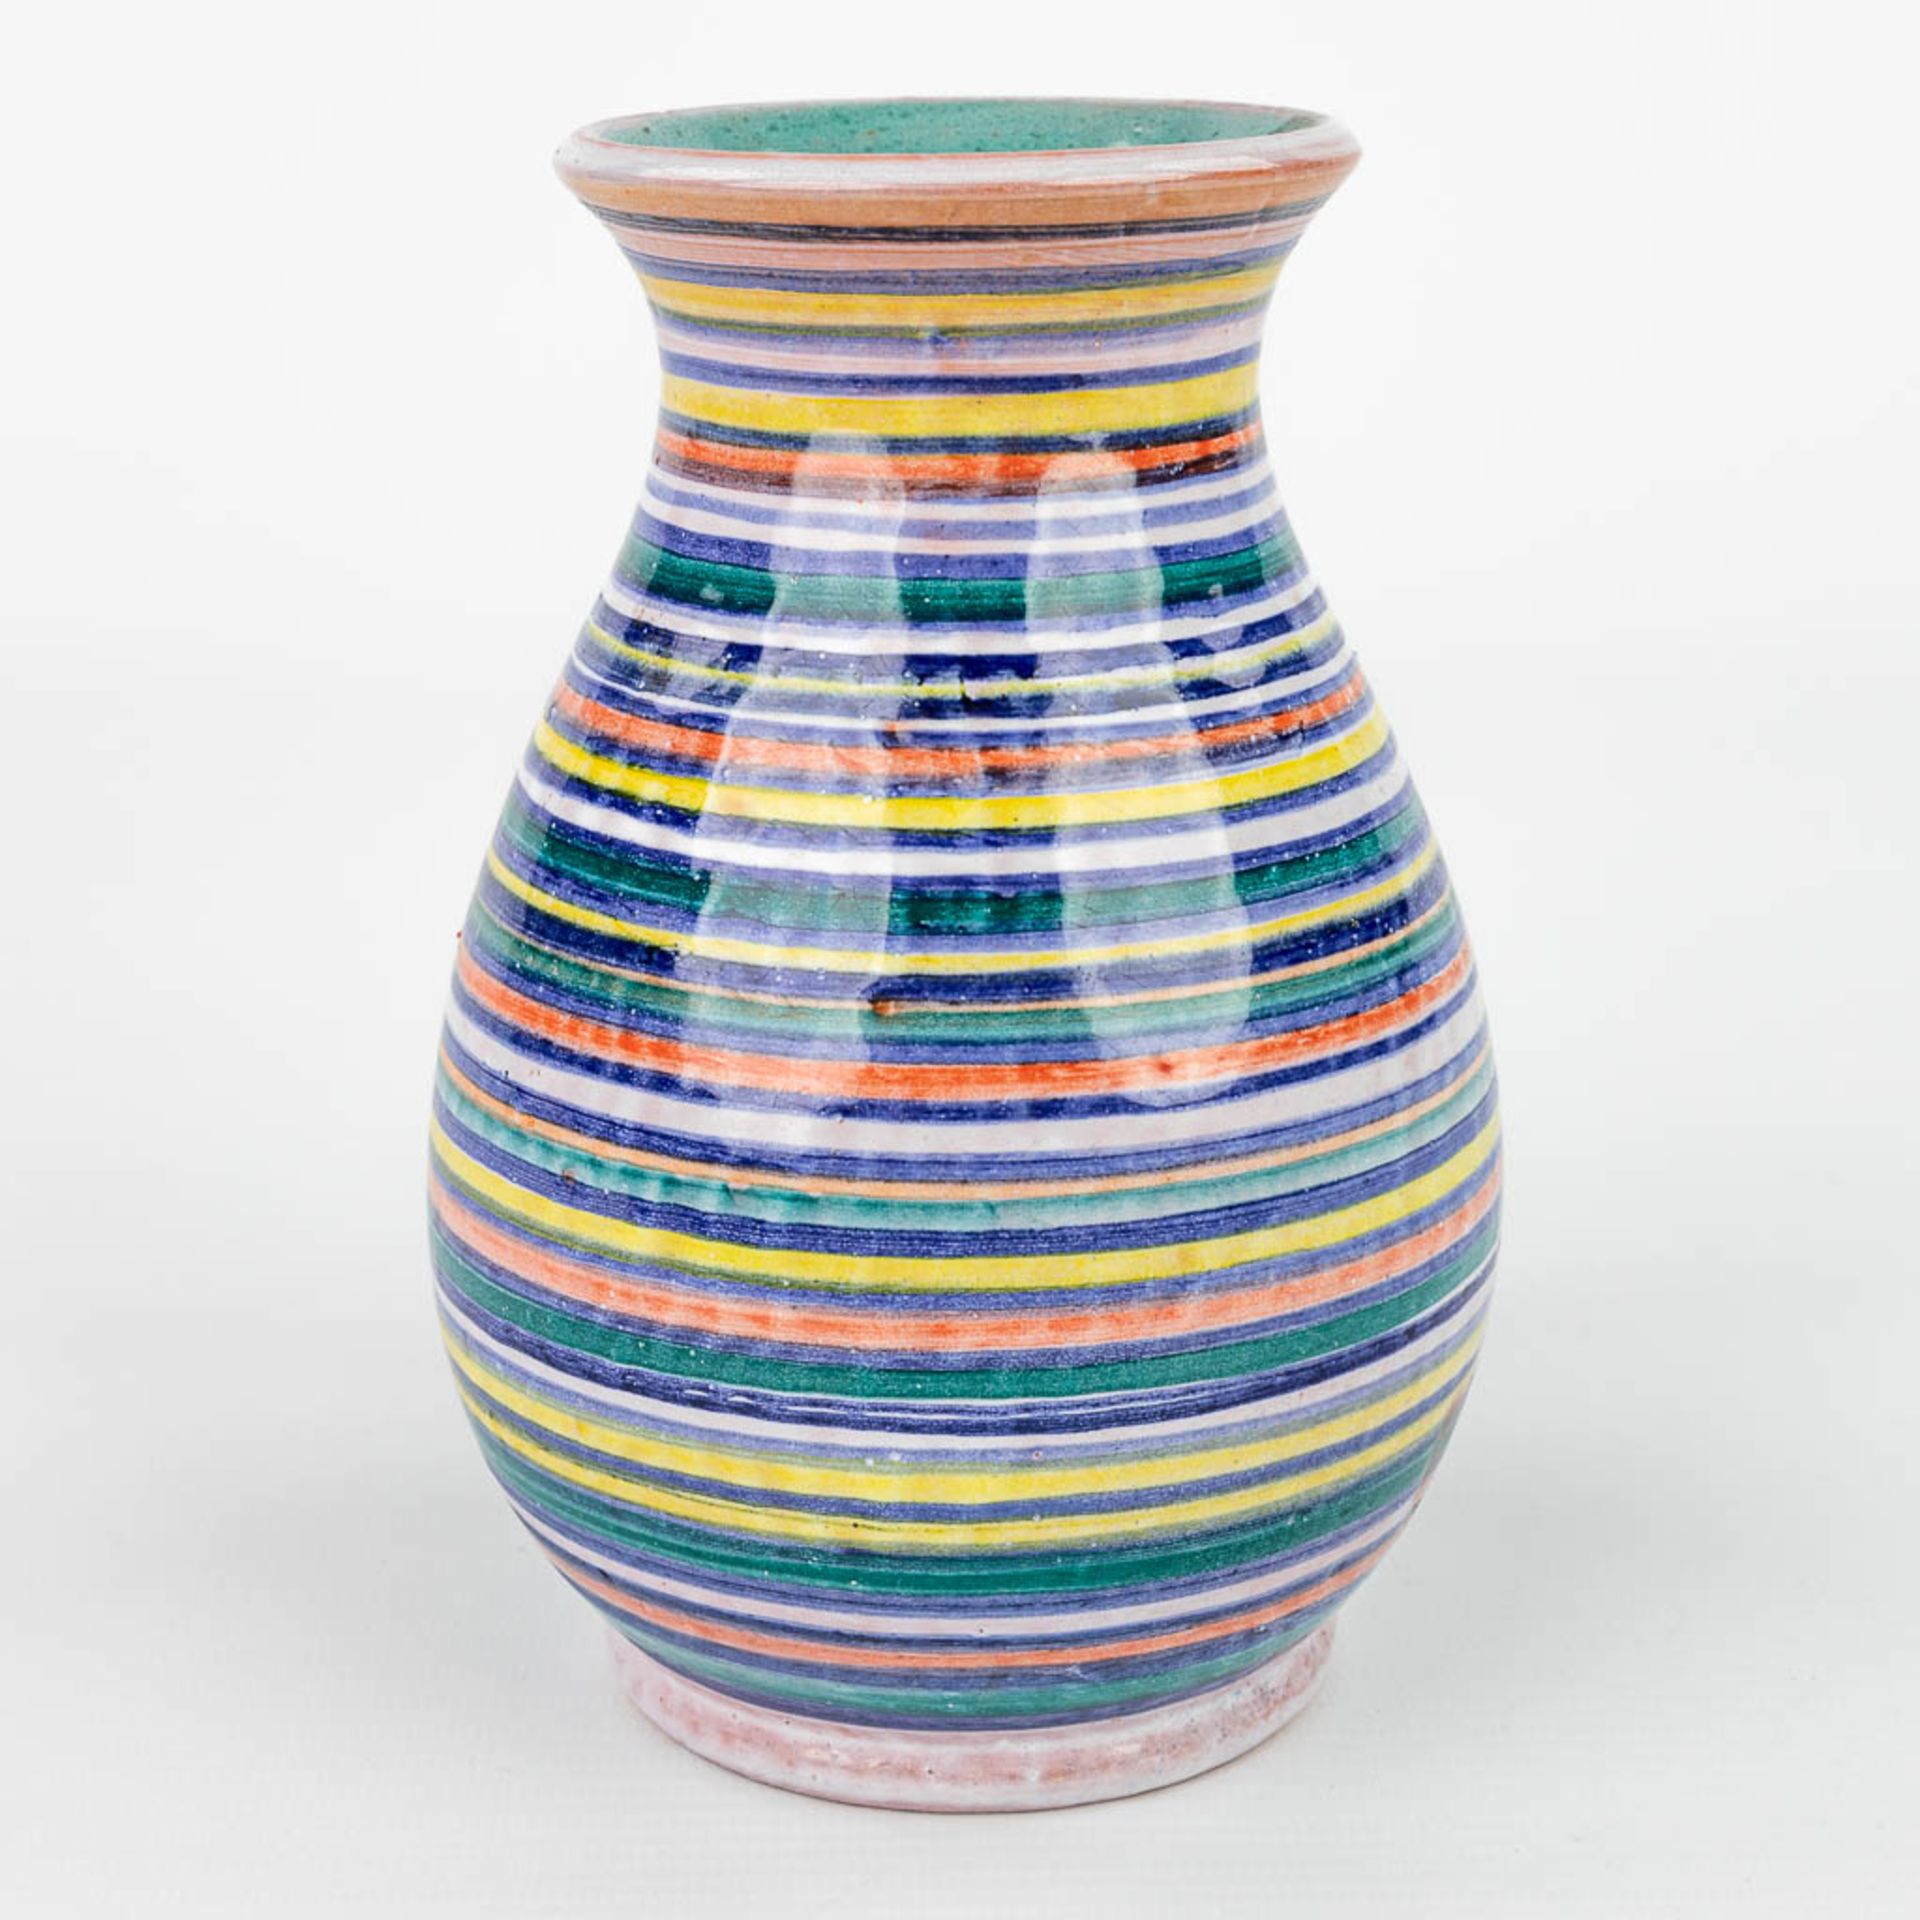 A vase made of glazed ceramics with geometric shapes for Perignem. (H:15,5cm) - Image 7 of 11